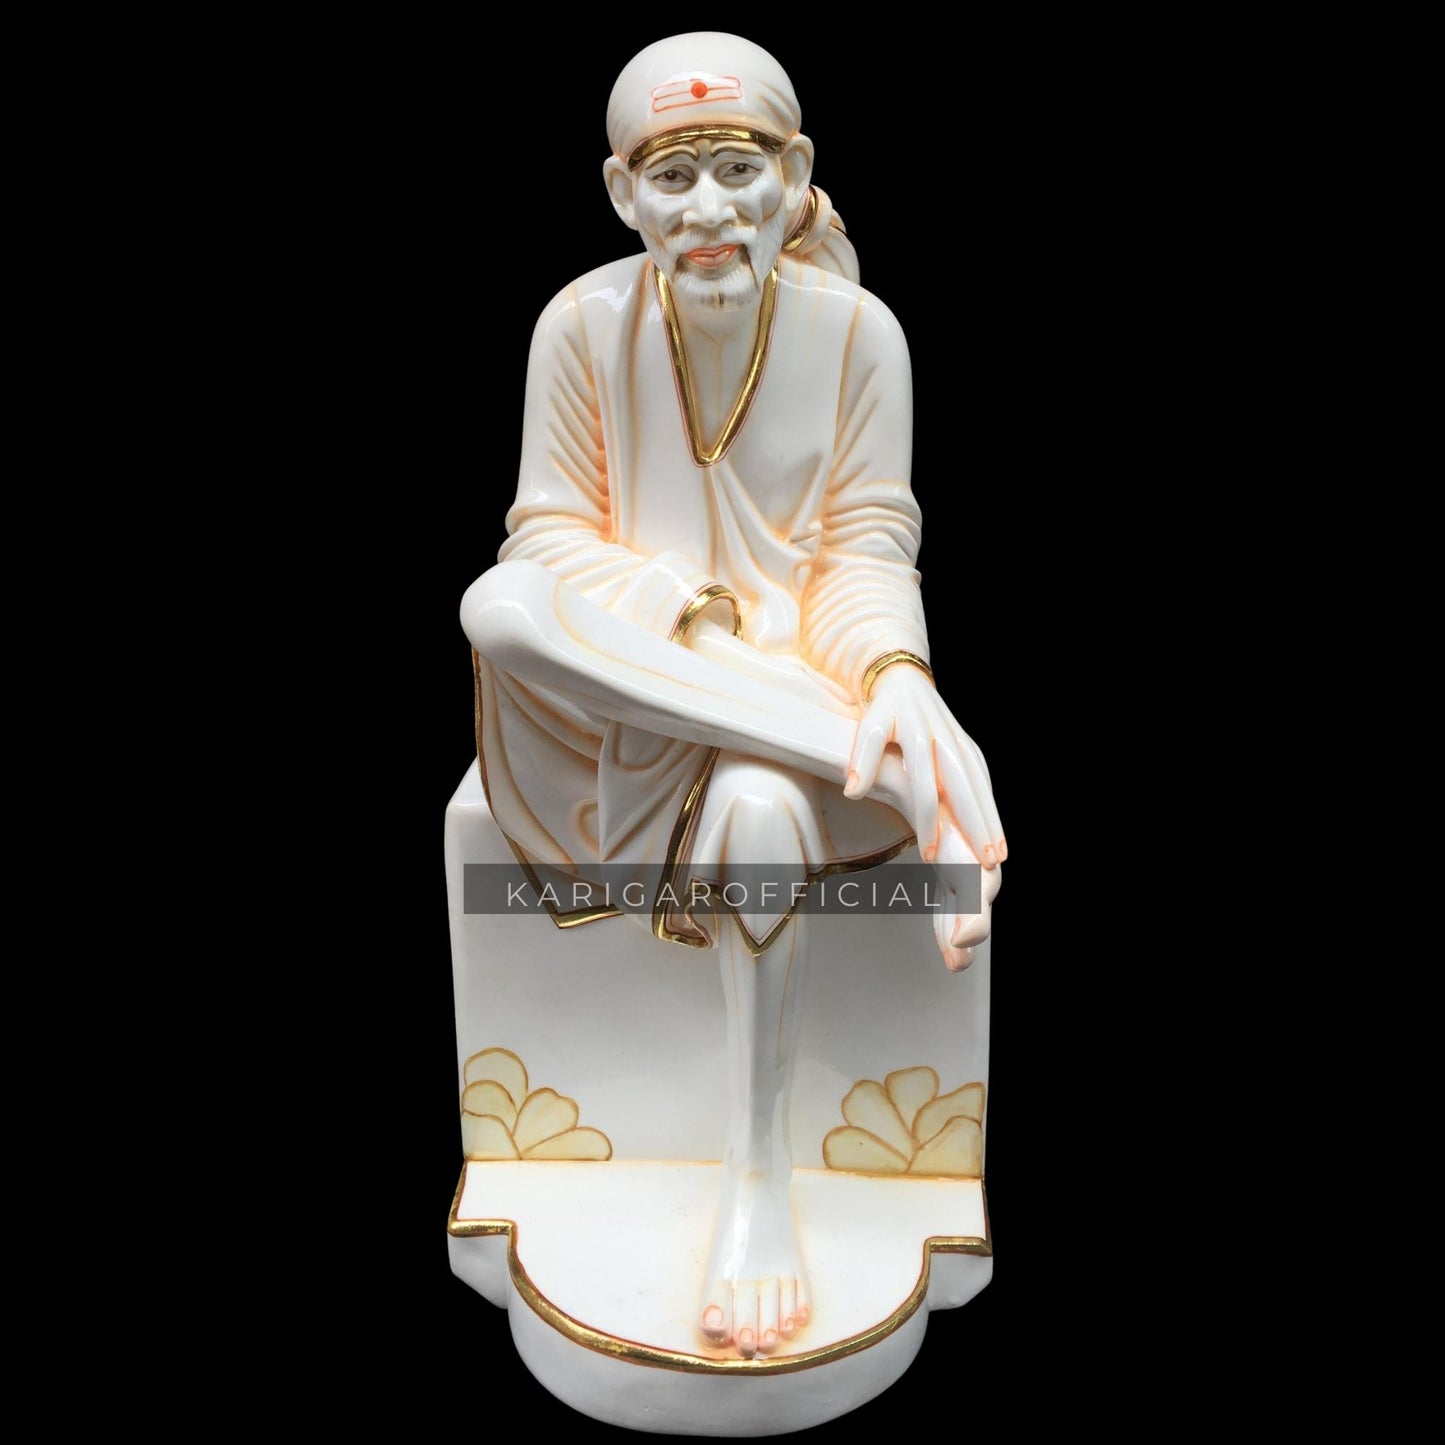 Sai baba Statue, White Marble Satya Sai Murti, Large 24 inches Sai baba idol, The Selfless God Hindu Divine Sai baba figurine, Shirdi Sai Baba Sculpture, Sri DattaGuru Home Temple Housewarming Gifts